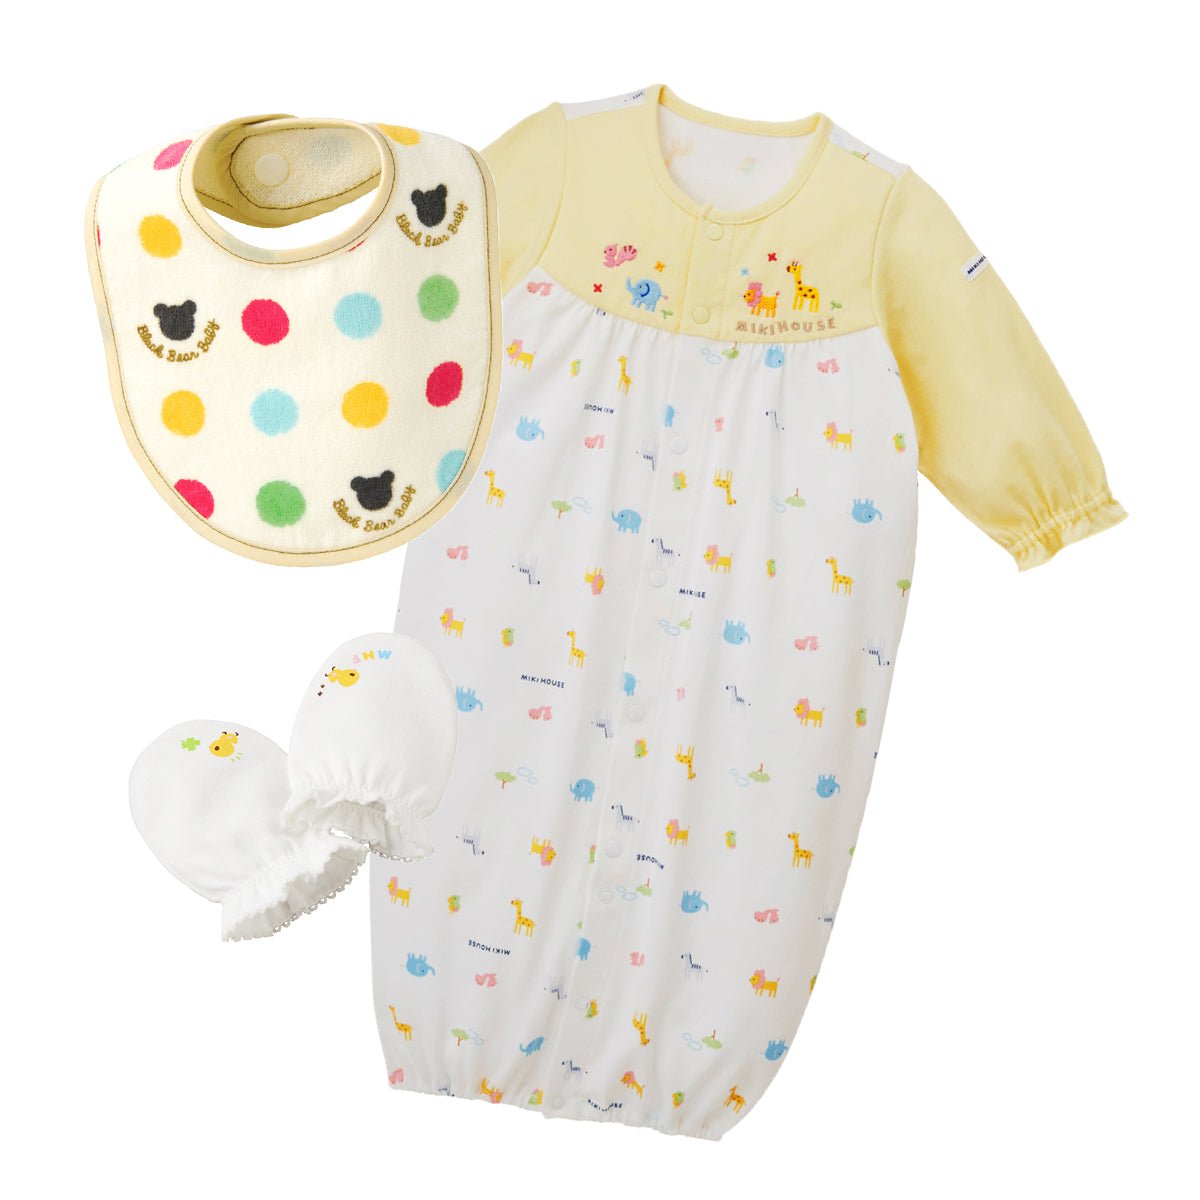 Baby Starter Kit (Yellow) with FREE Baby Club Membership - MIKI HOUSE USA